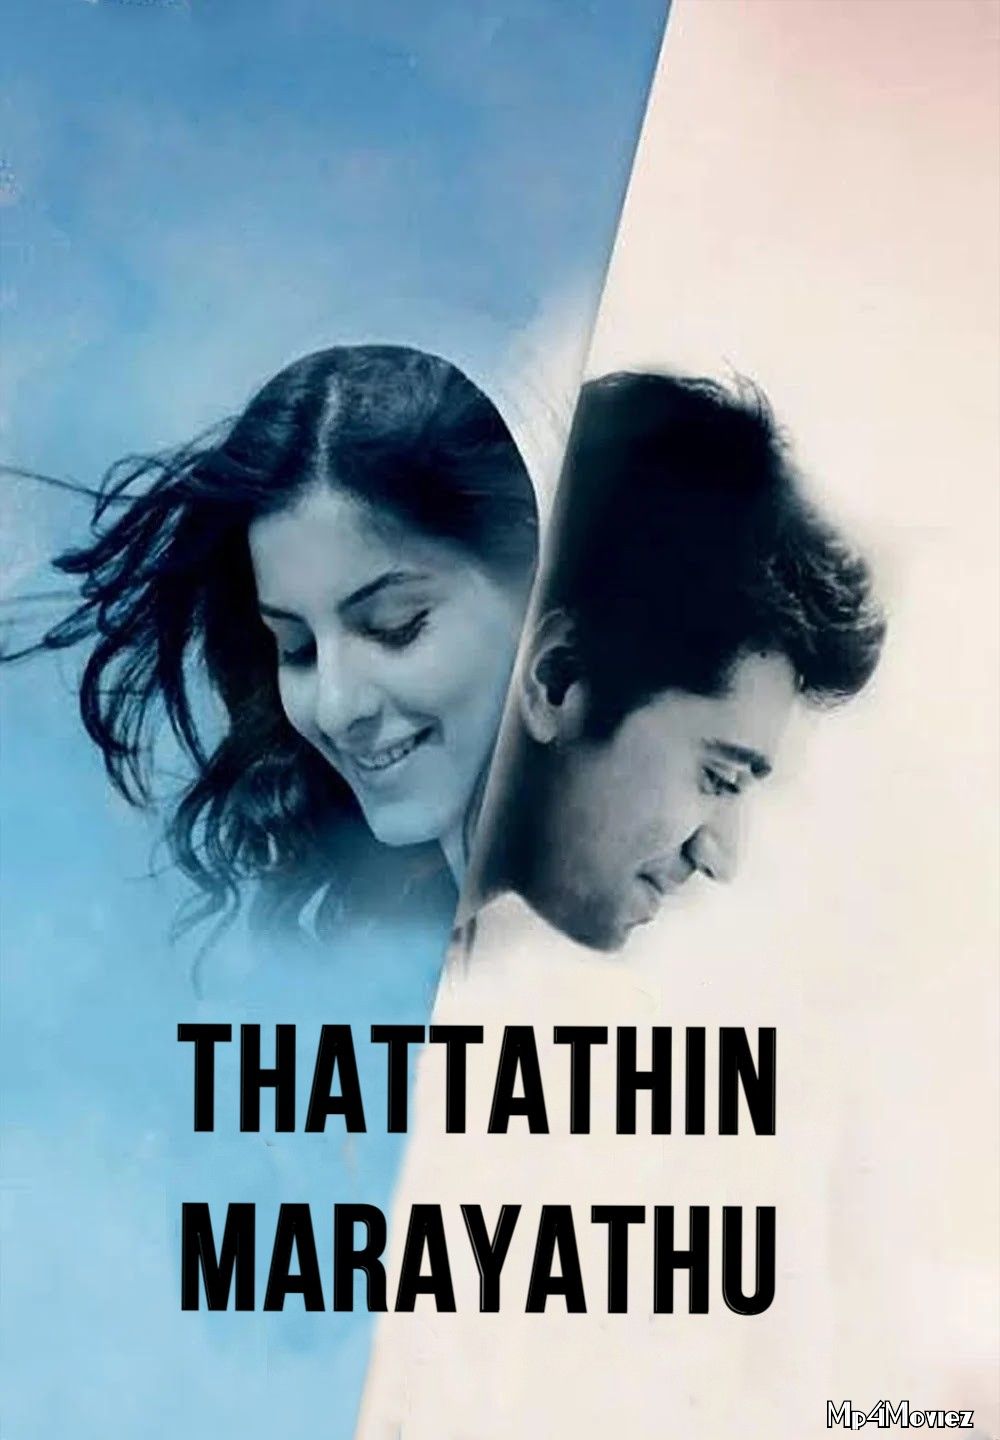 Thattathin Marayathu (2021) Hindi Dubbed HDRip download full movie